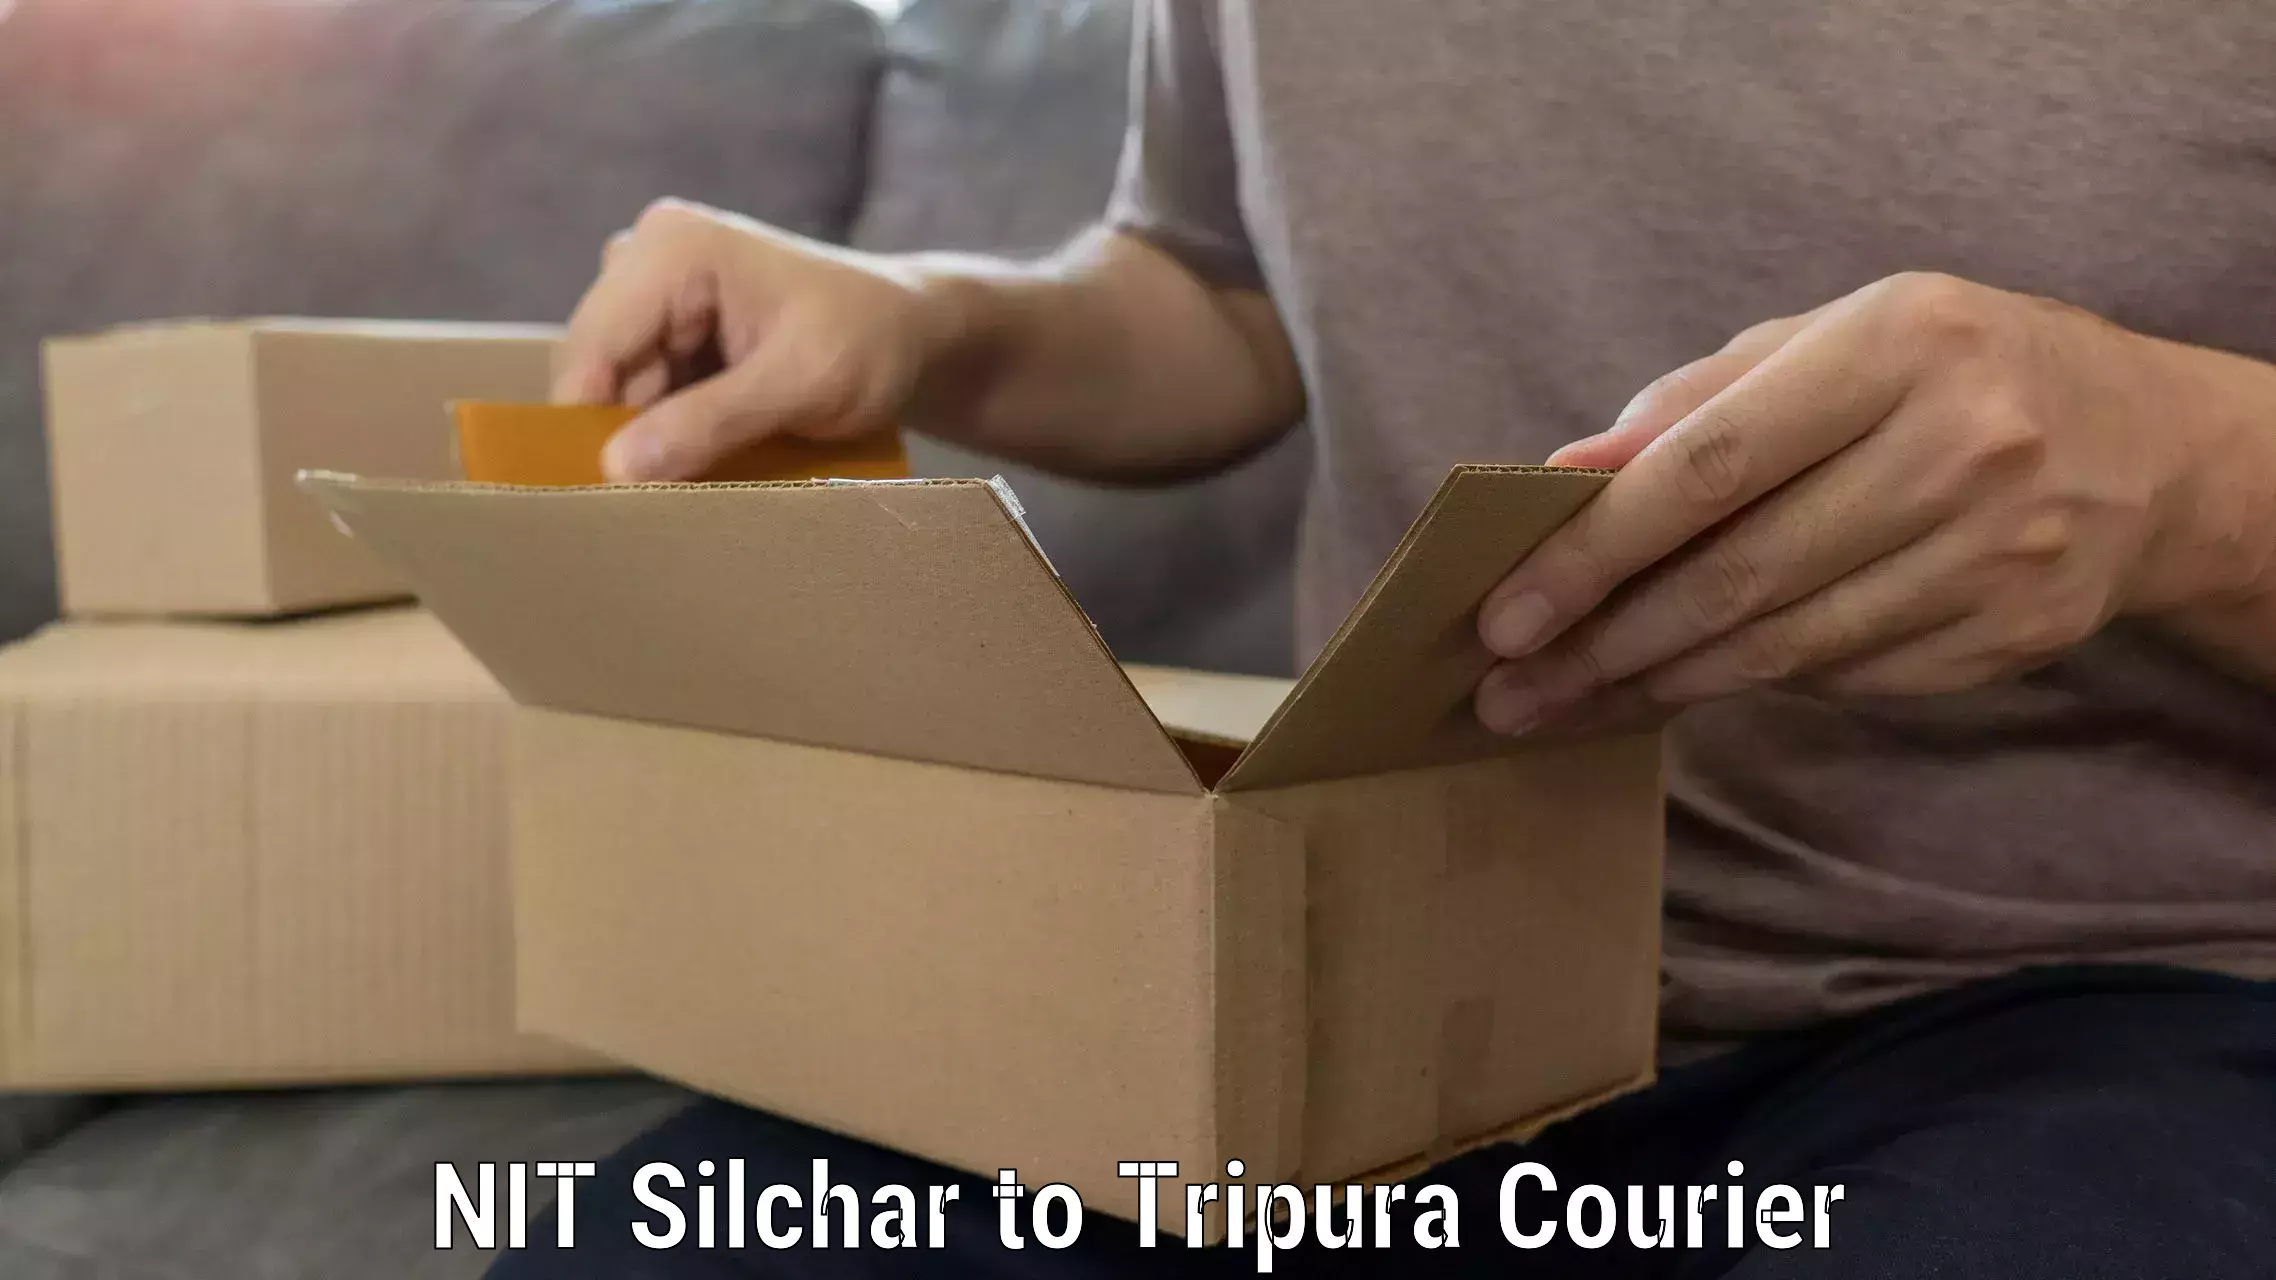 Professional moving company NIT Silchar to Bishalgarh